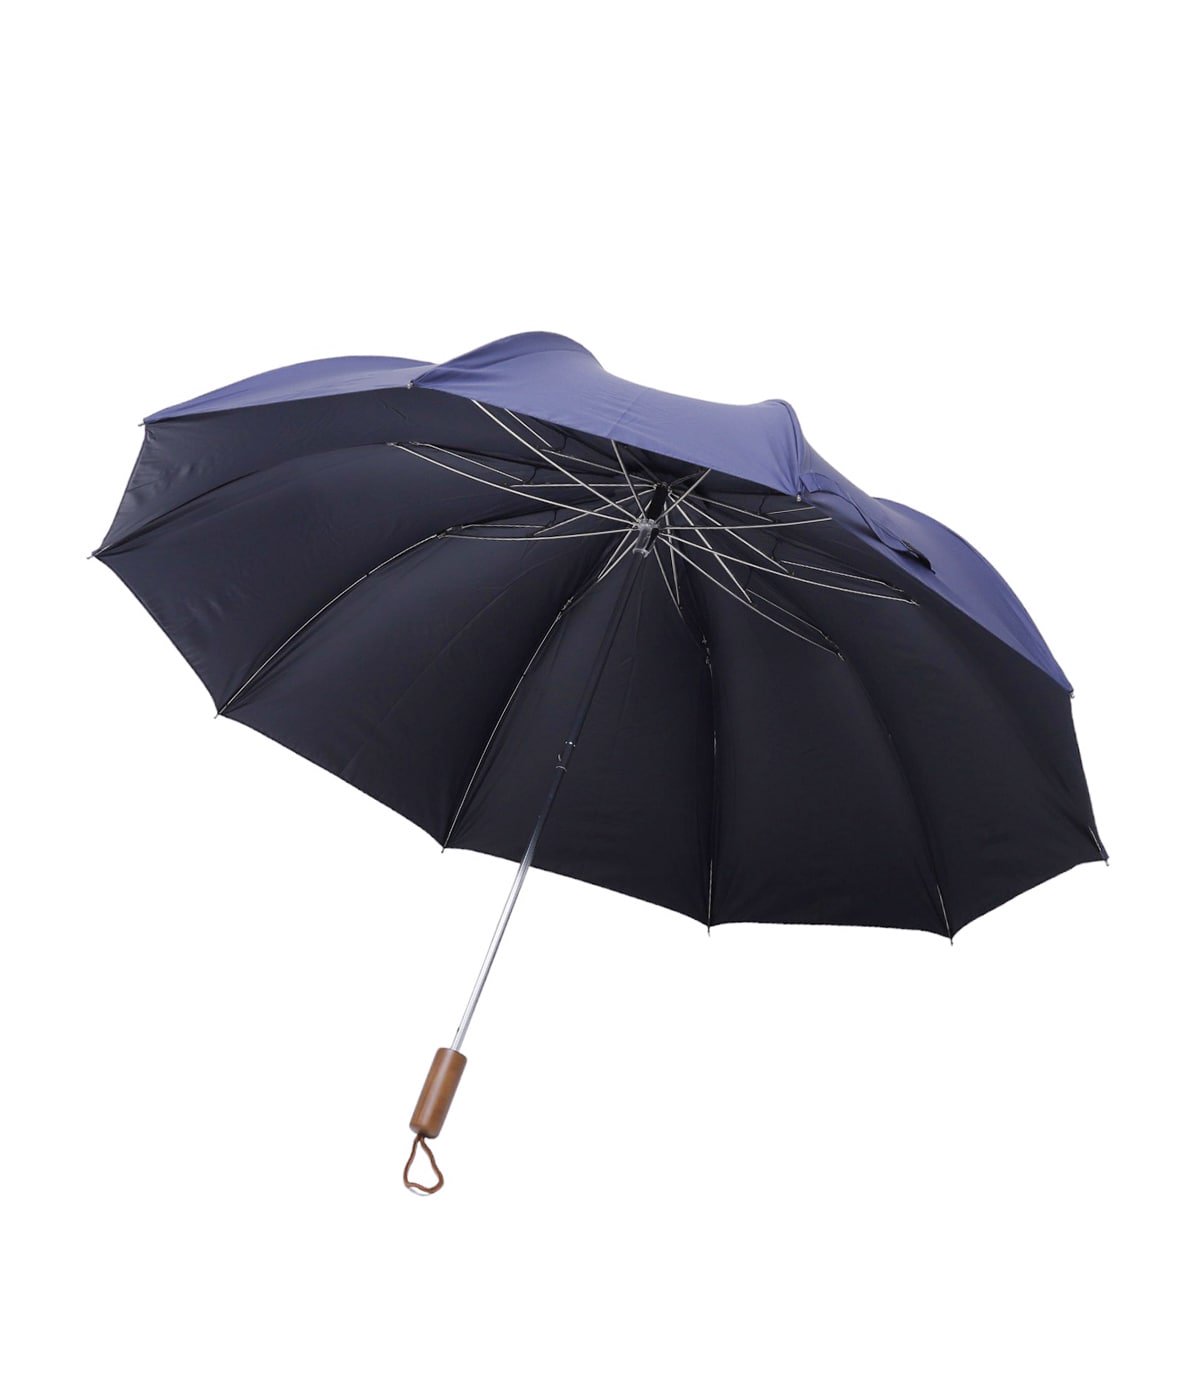 【ONLY ARK】別注 TELESCOPIC UMBLELLA-Maple Straight / 折りたたみ傘 晴雨兼用 遮光